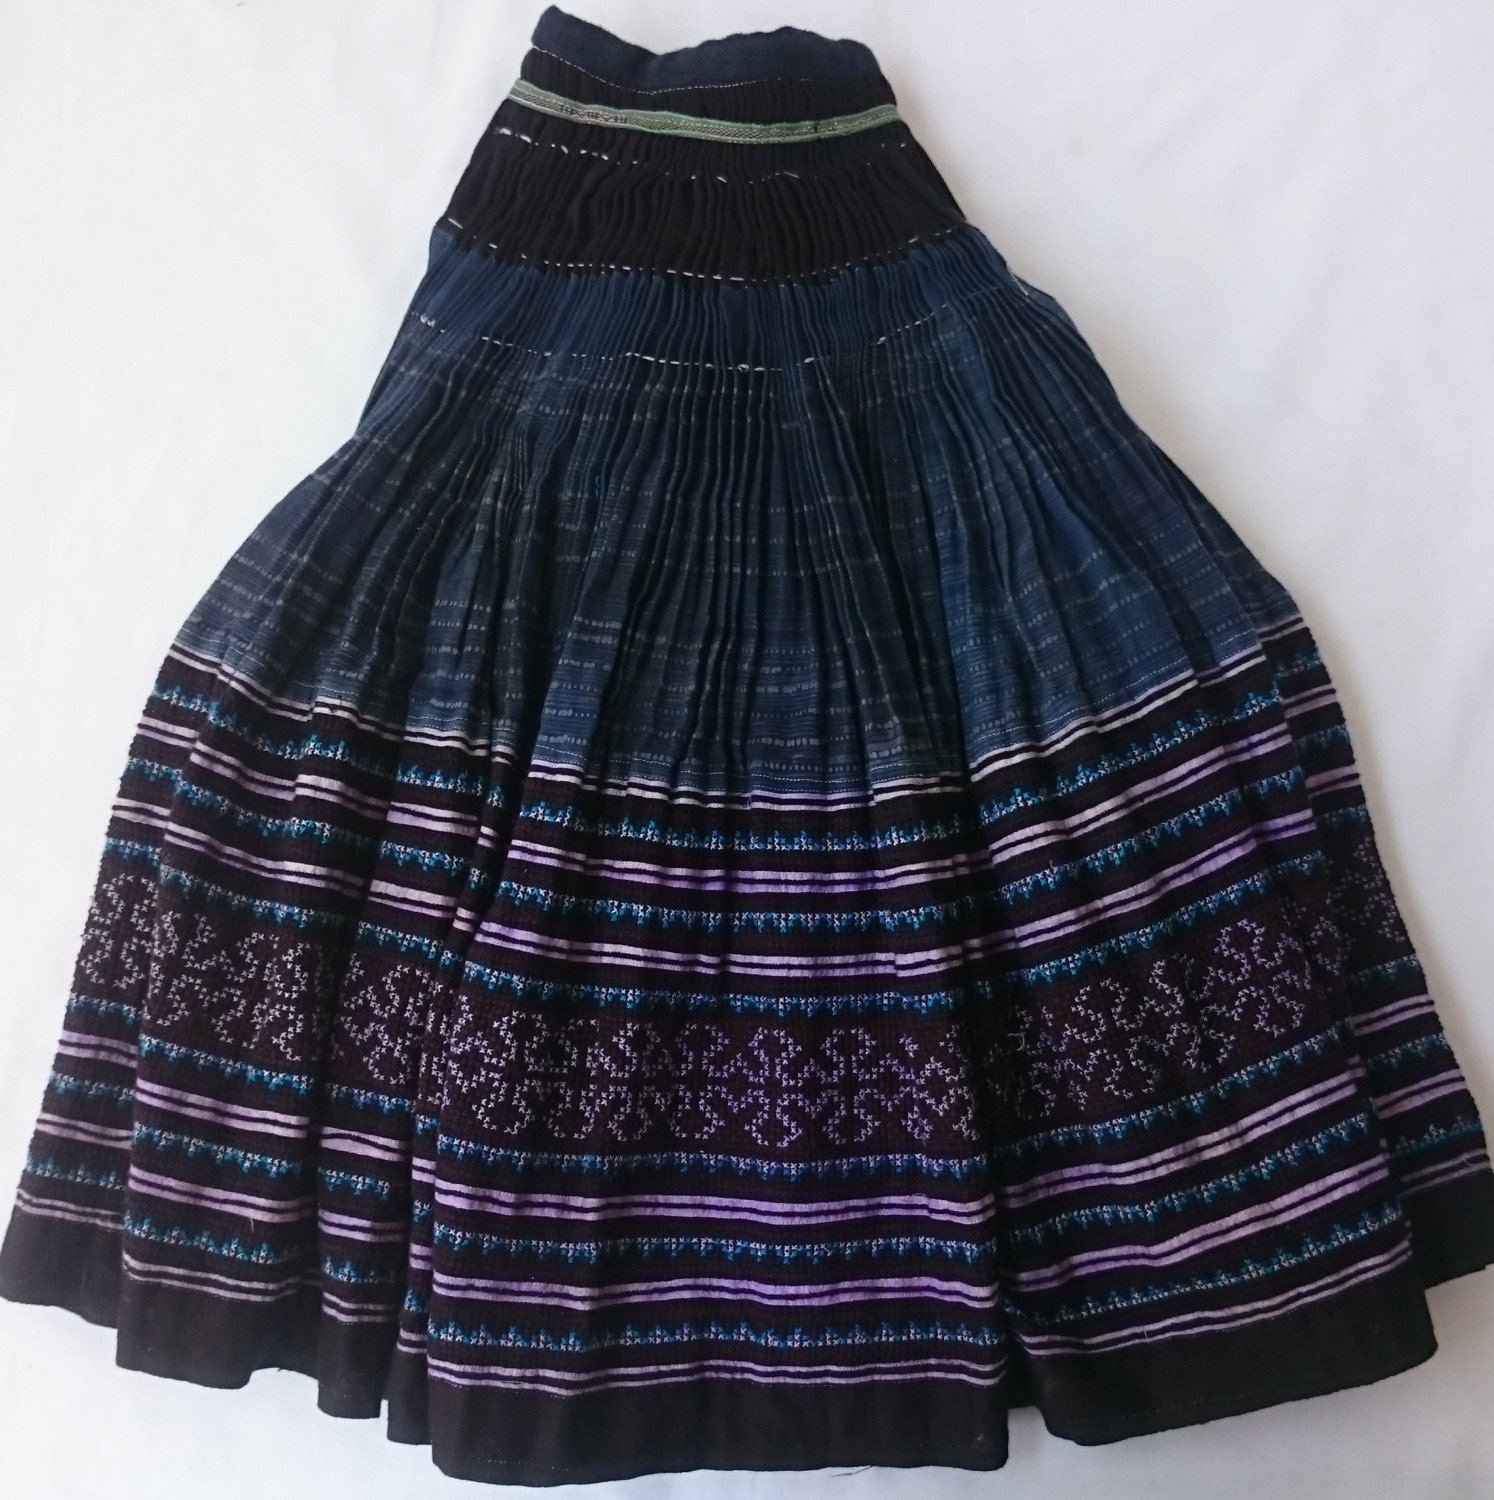 Vintage Handwoven Black Hmong Skirt / Dress Fabric by LannaPassa